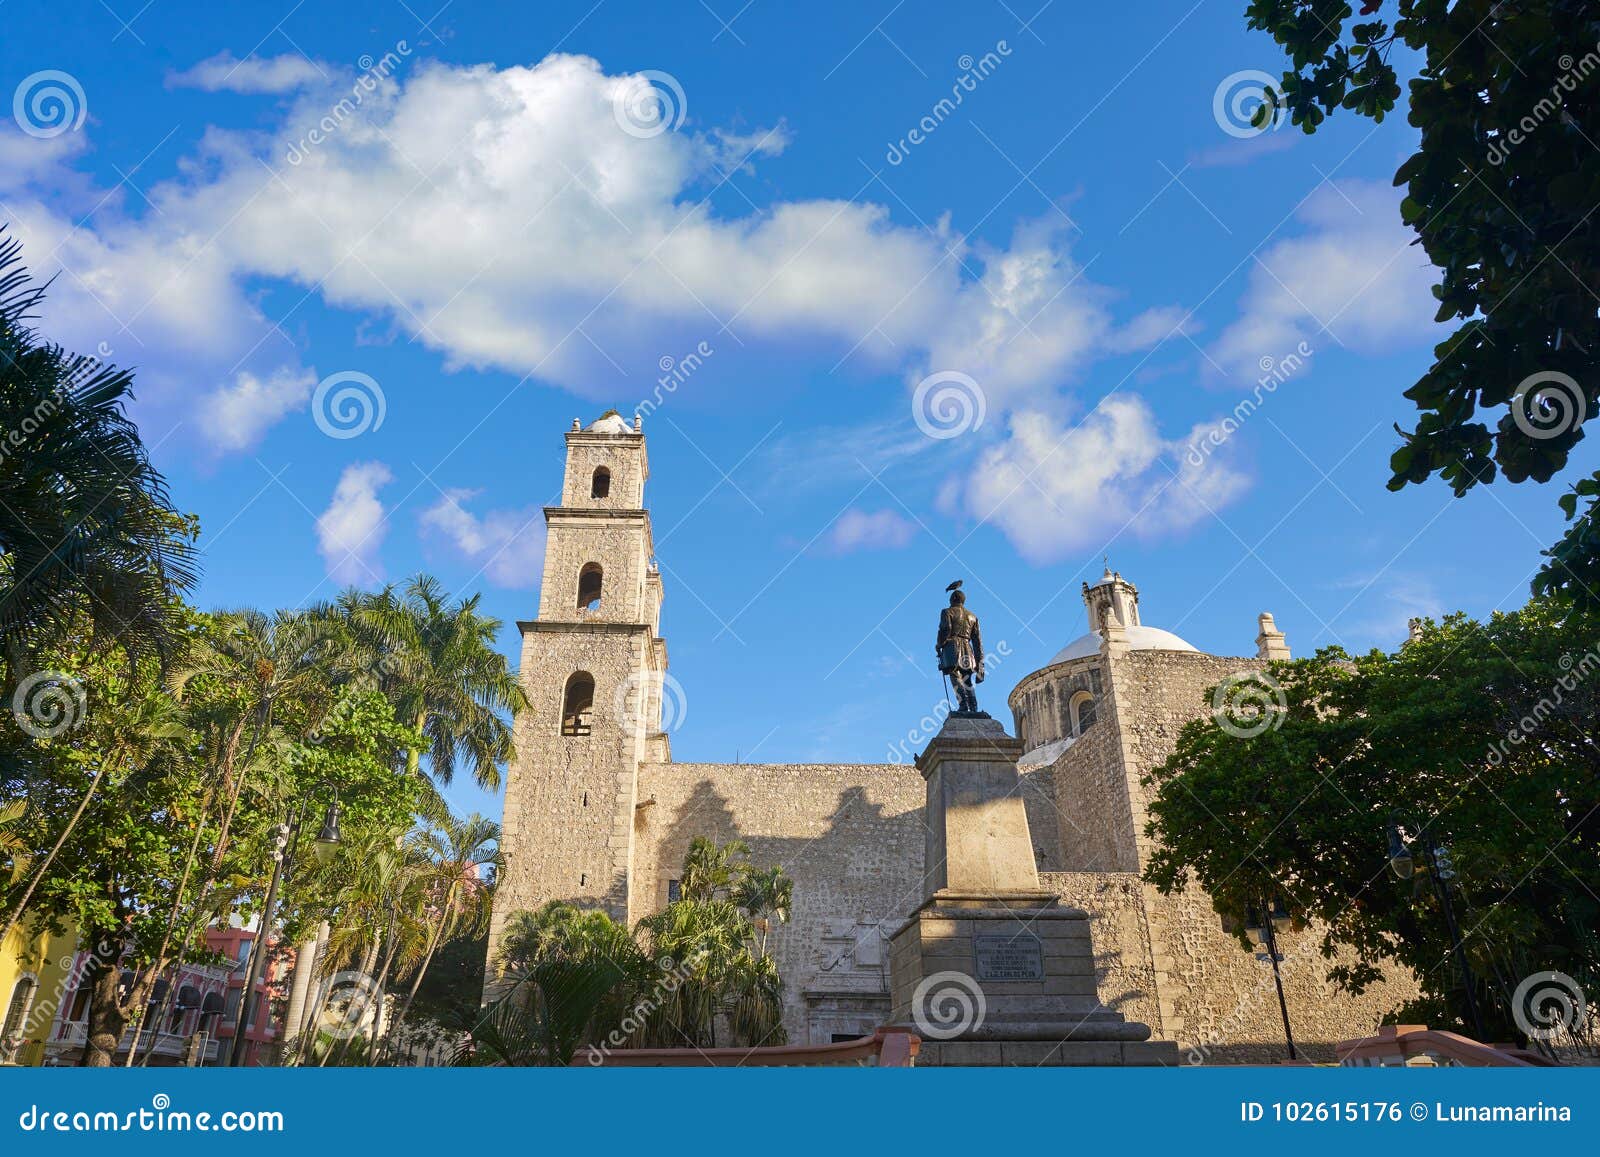 merida city tercera orden church yucatan